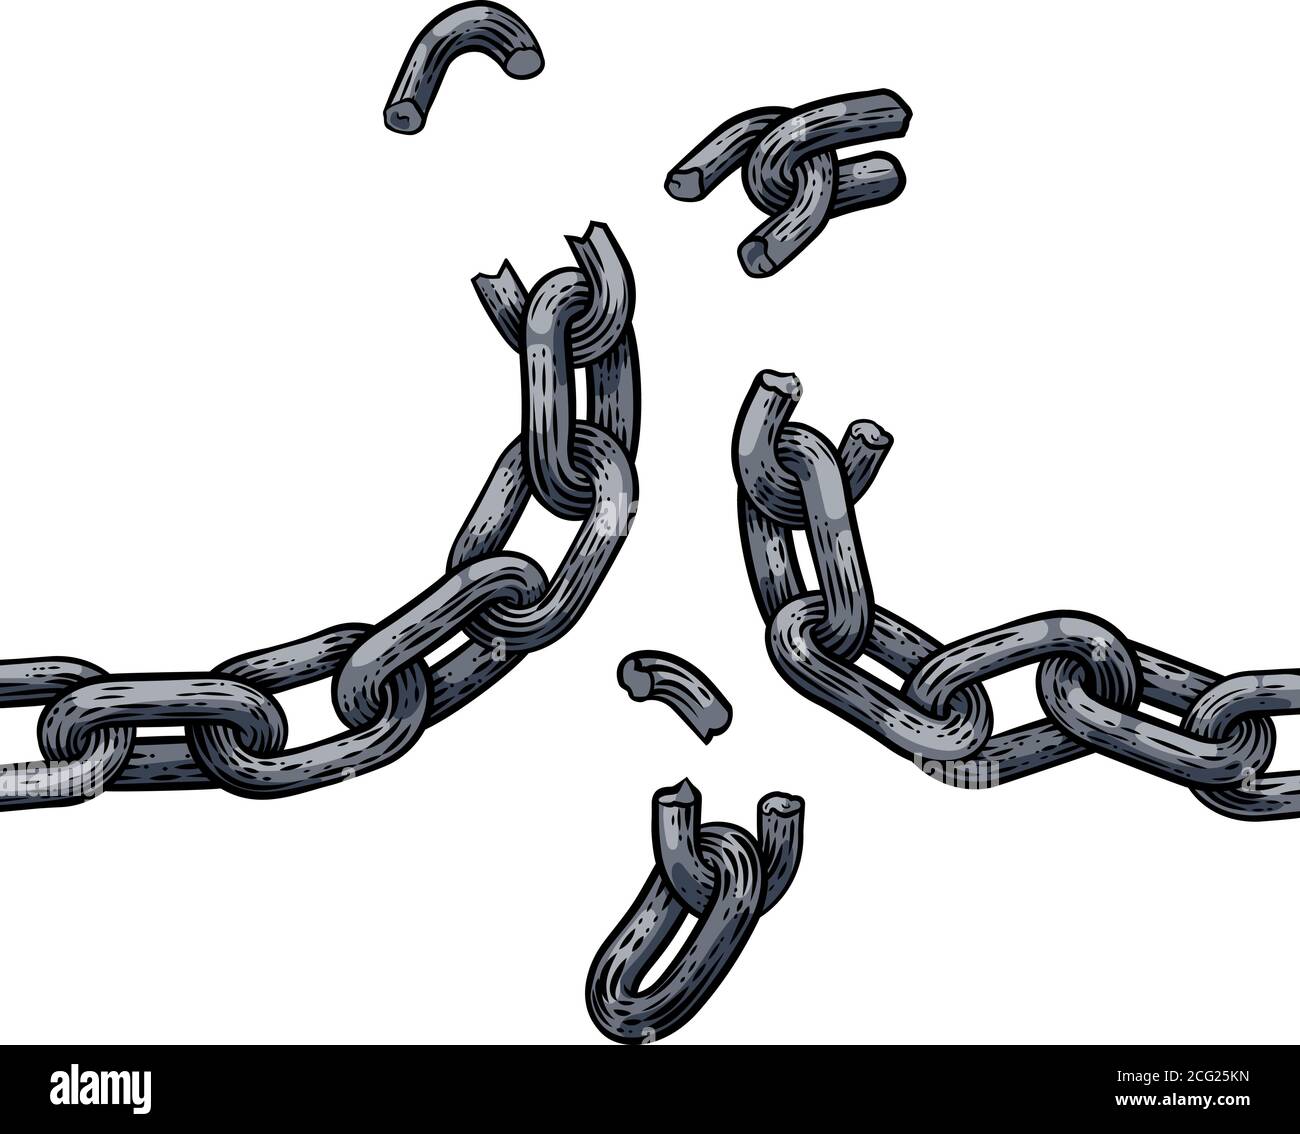 Chain Links Breaking Freedom Design Stock Vector